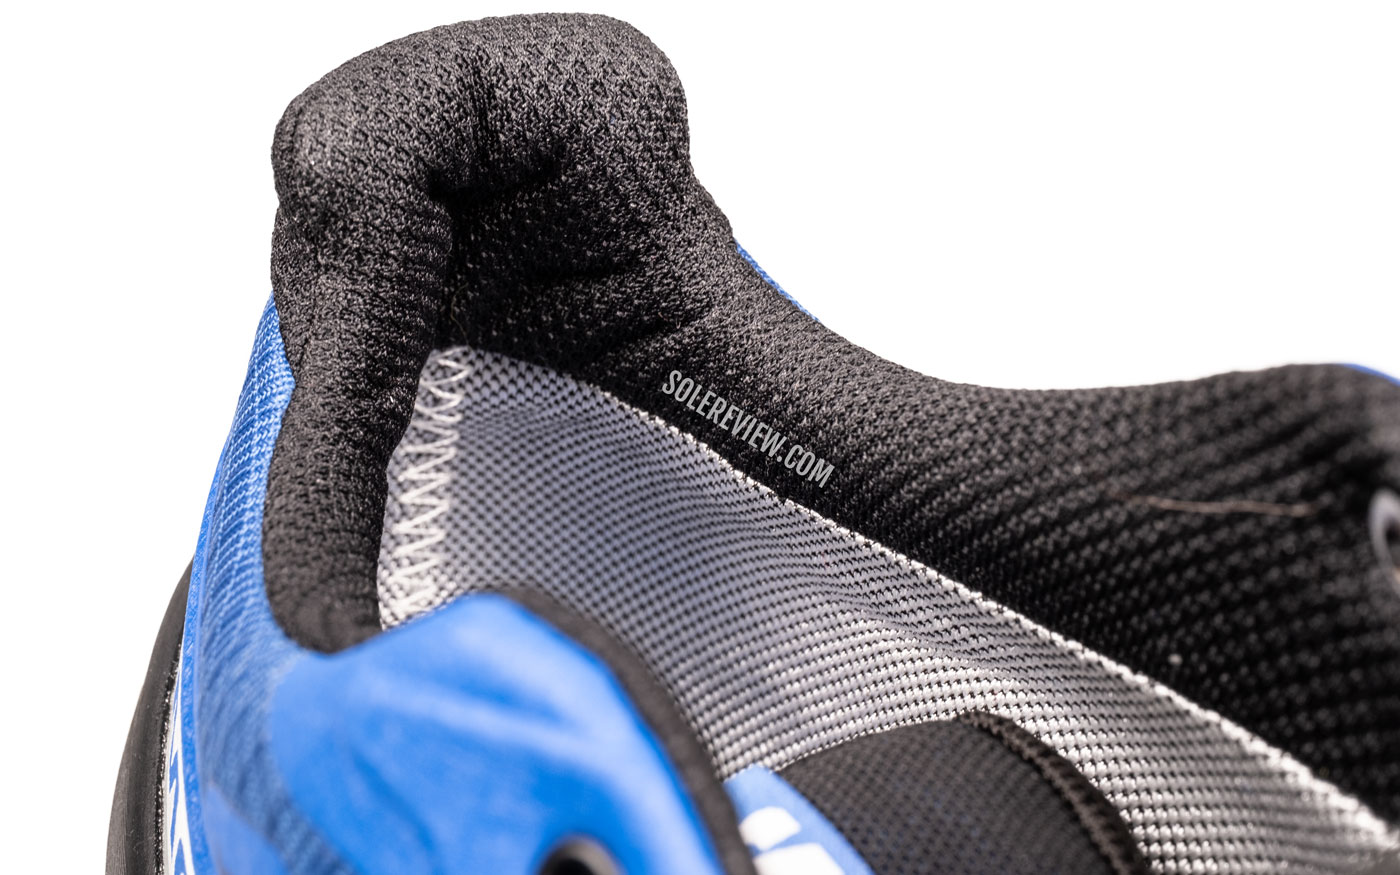 The heel collar of the Salomon Speedcross 6.